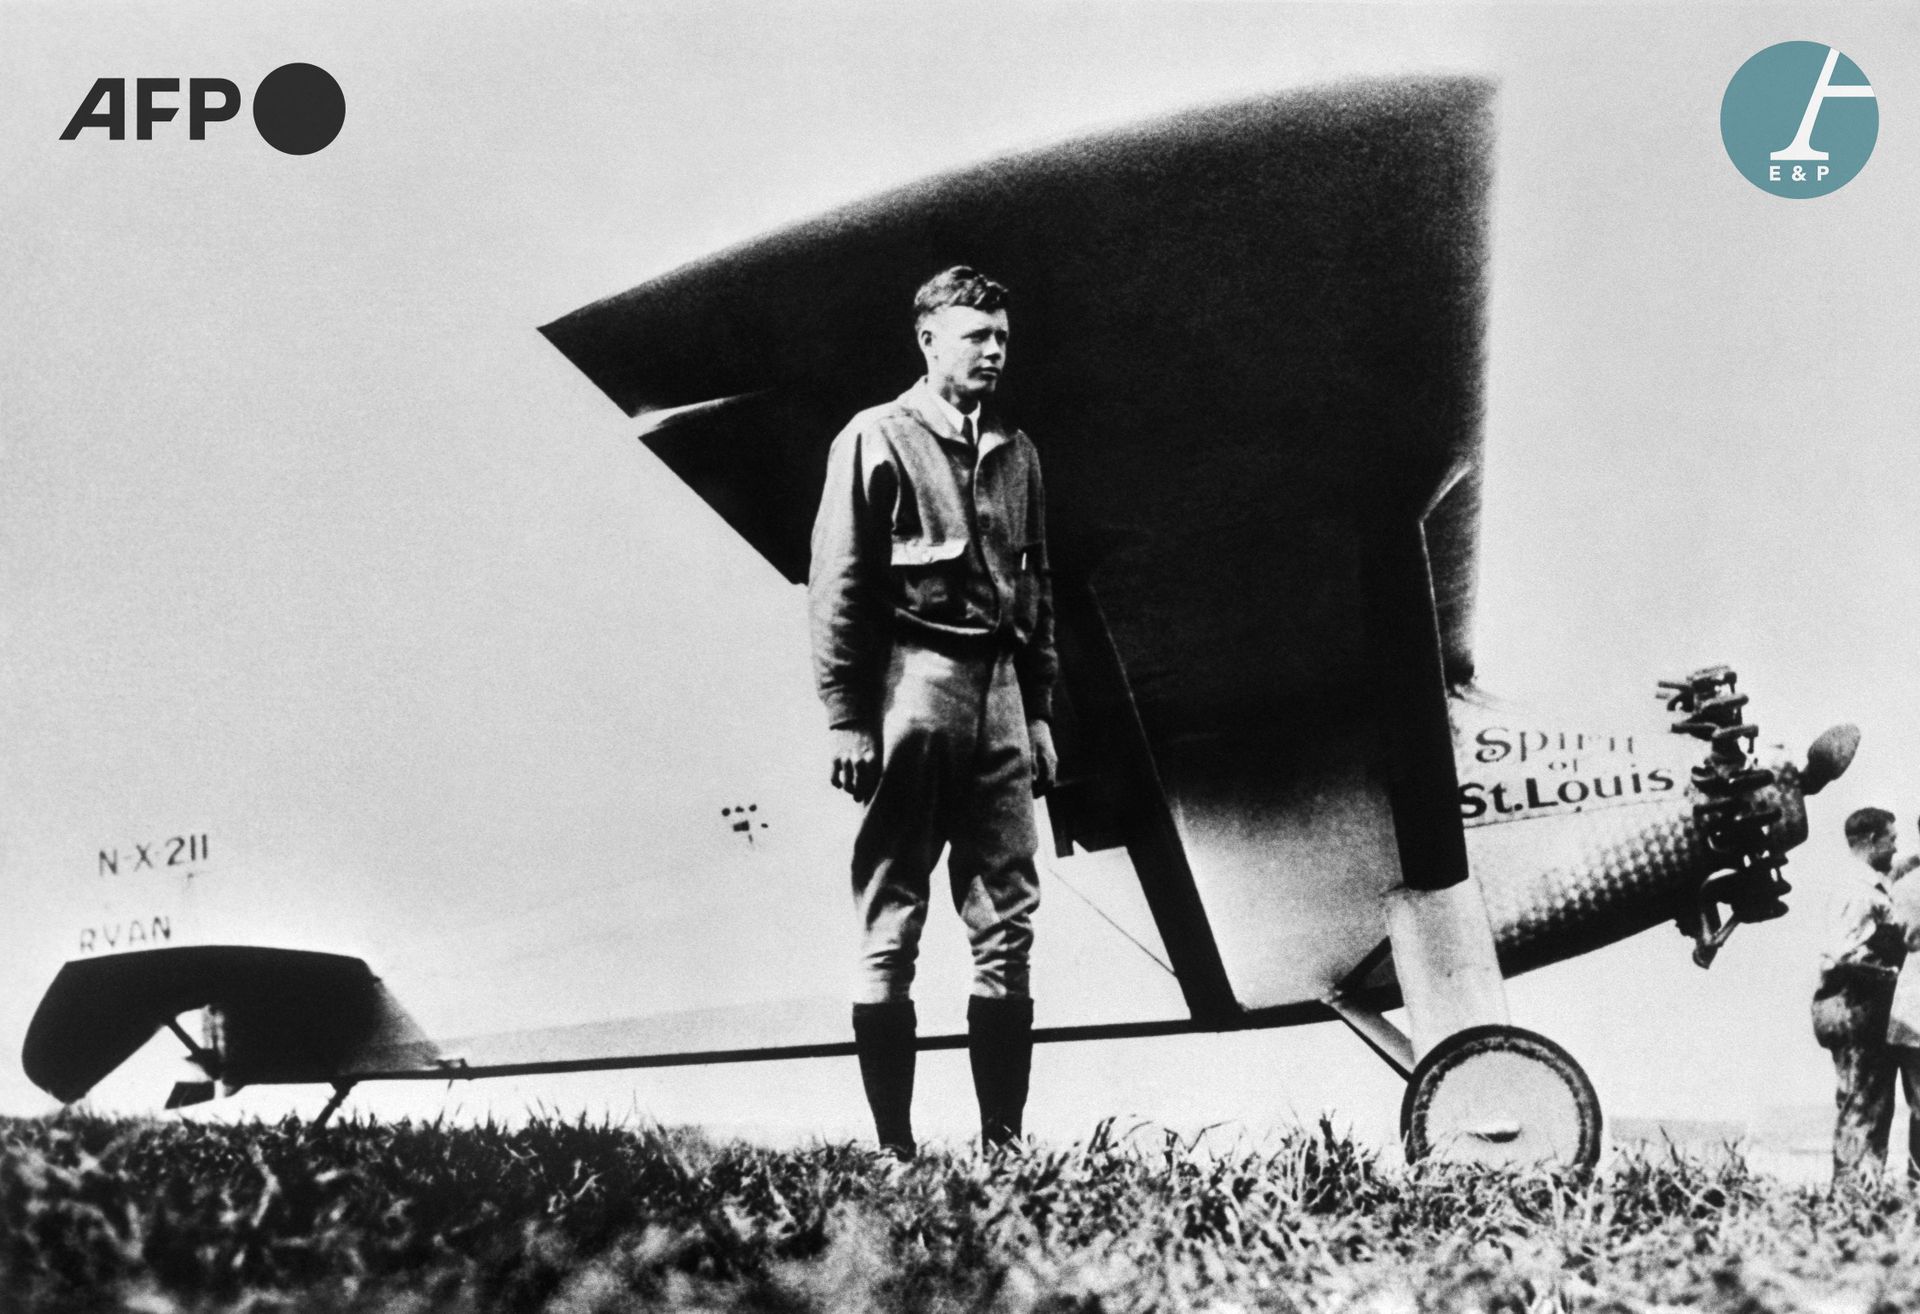 Null 
AFP

L'aviateur américain Charles Lindbergh devant son monoplan Spirit of &hellip;